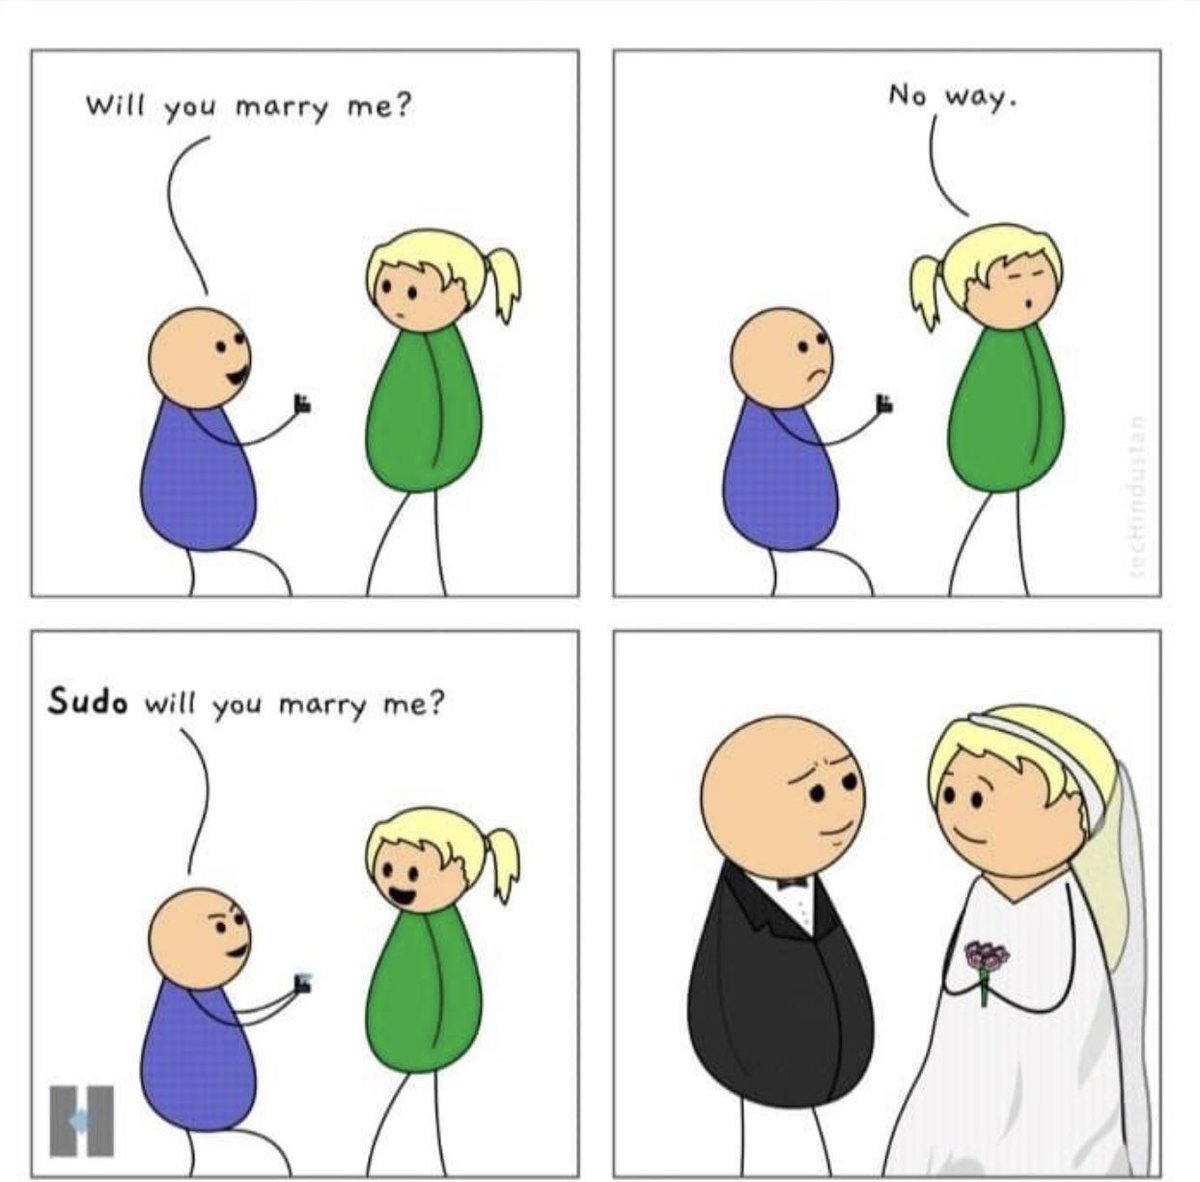 Will you marry me? https://www.reddit.com/r/programmerhumor/comments/nc62s7...